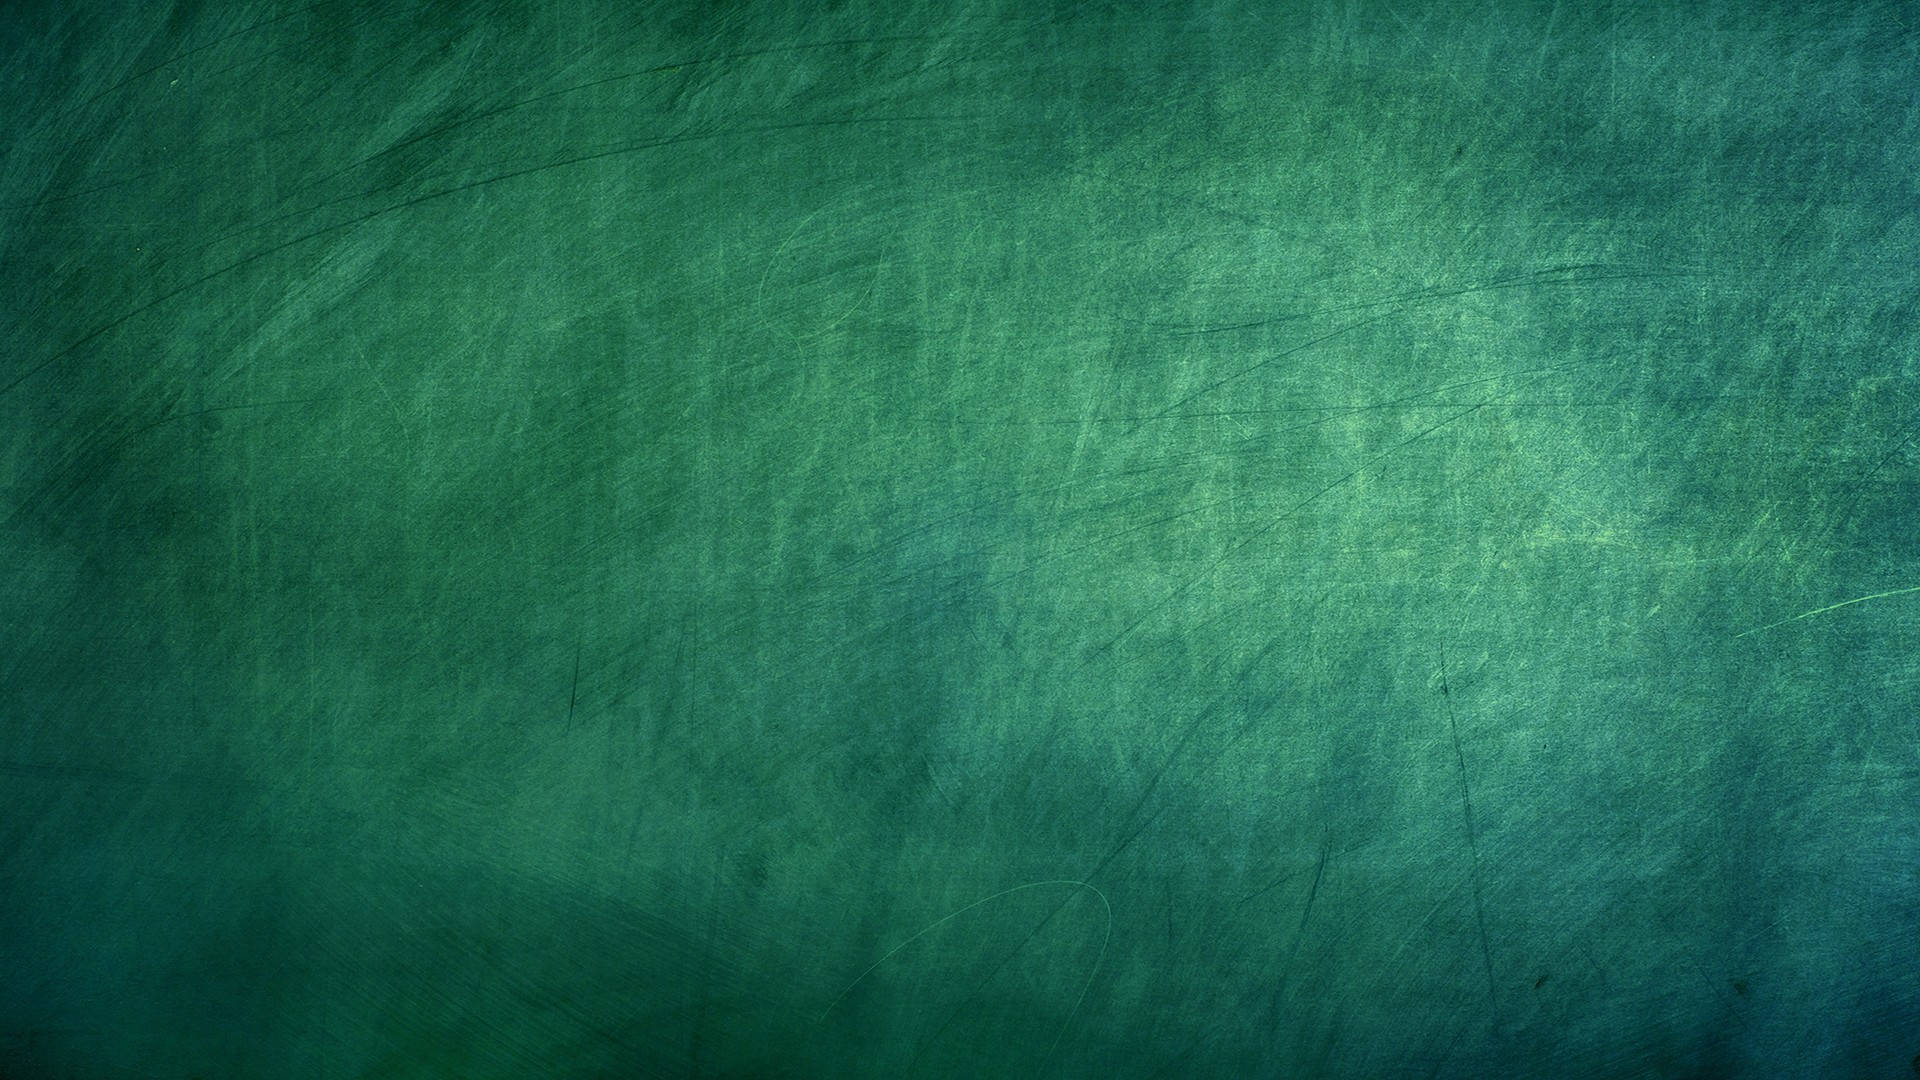 Grungy Green Chalkboard Background